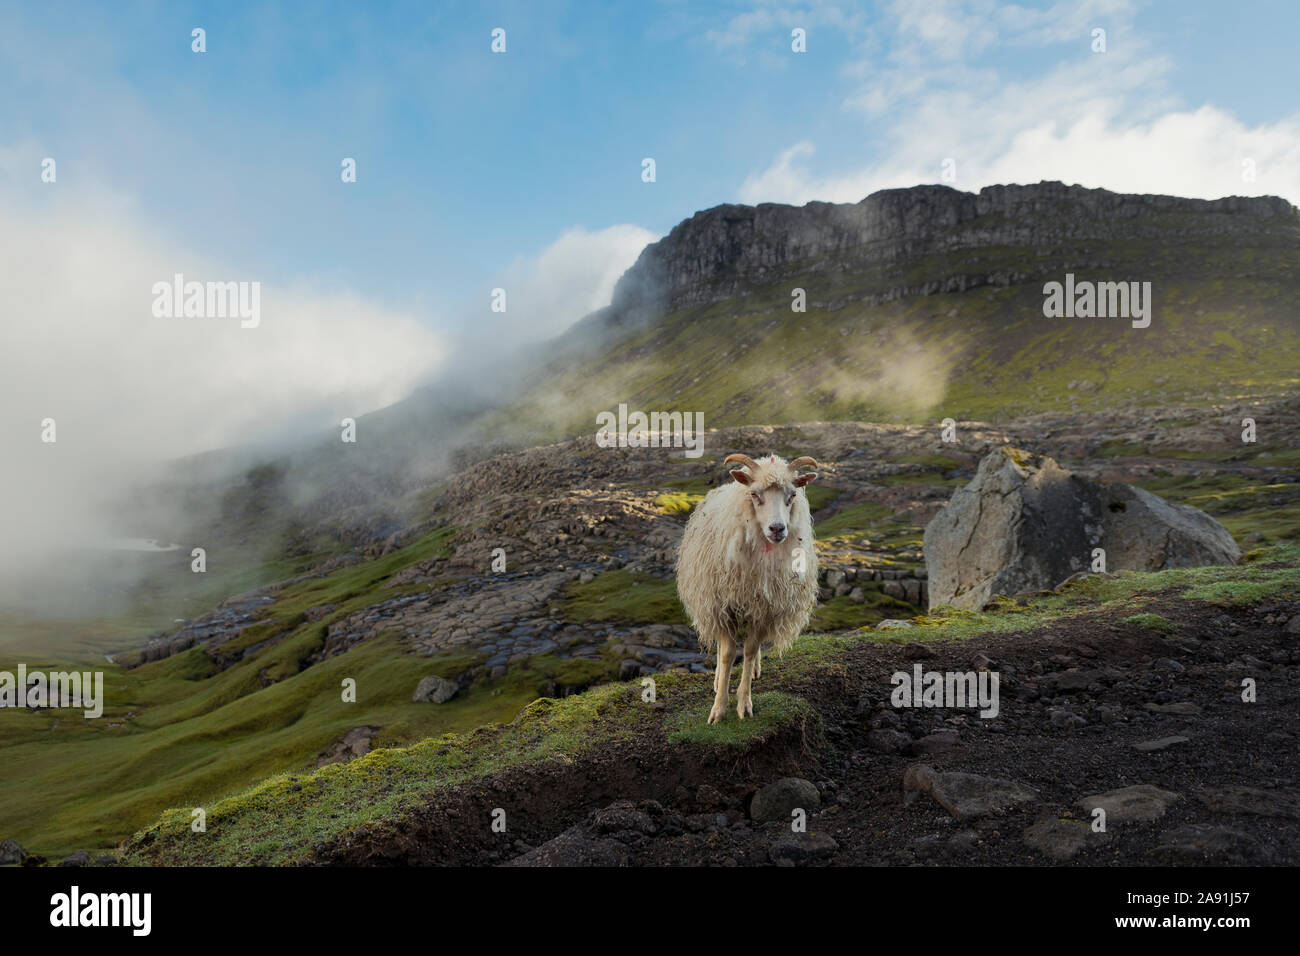 Sheep on meadow Stock Photo